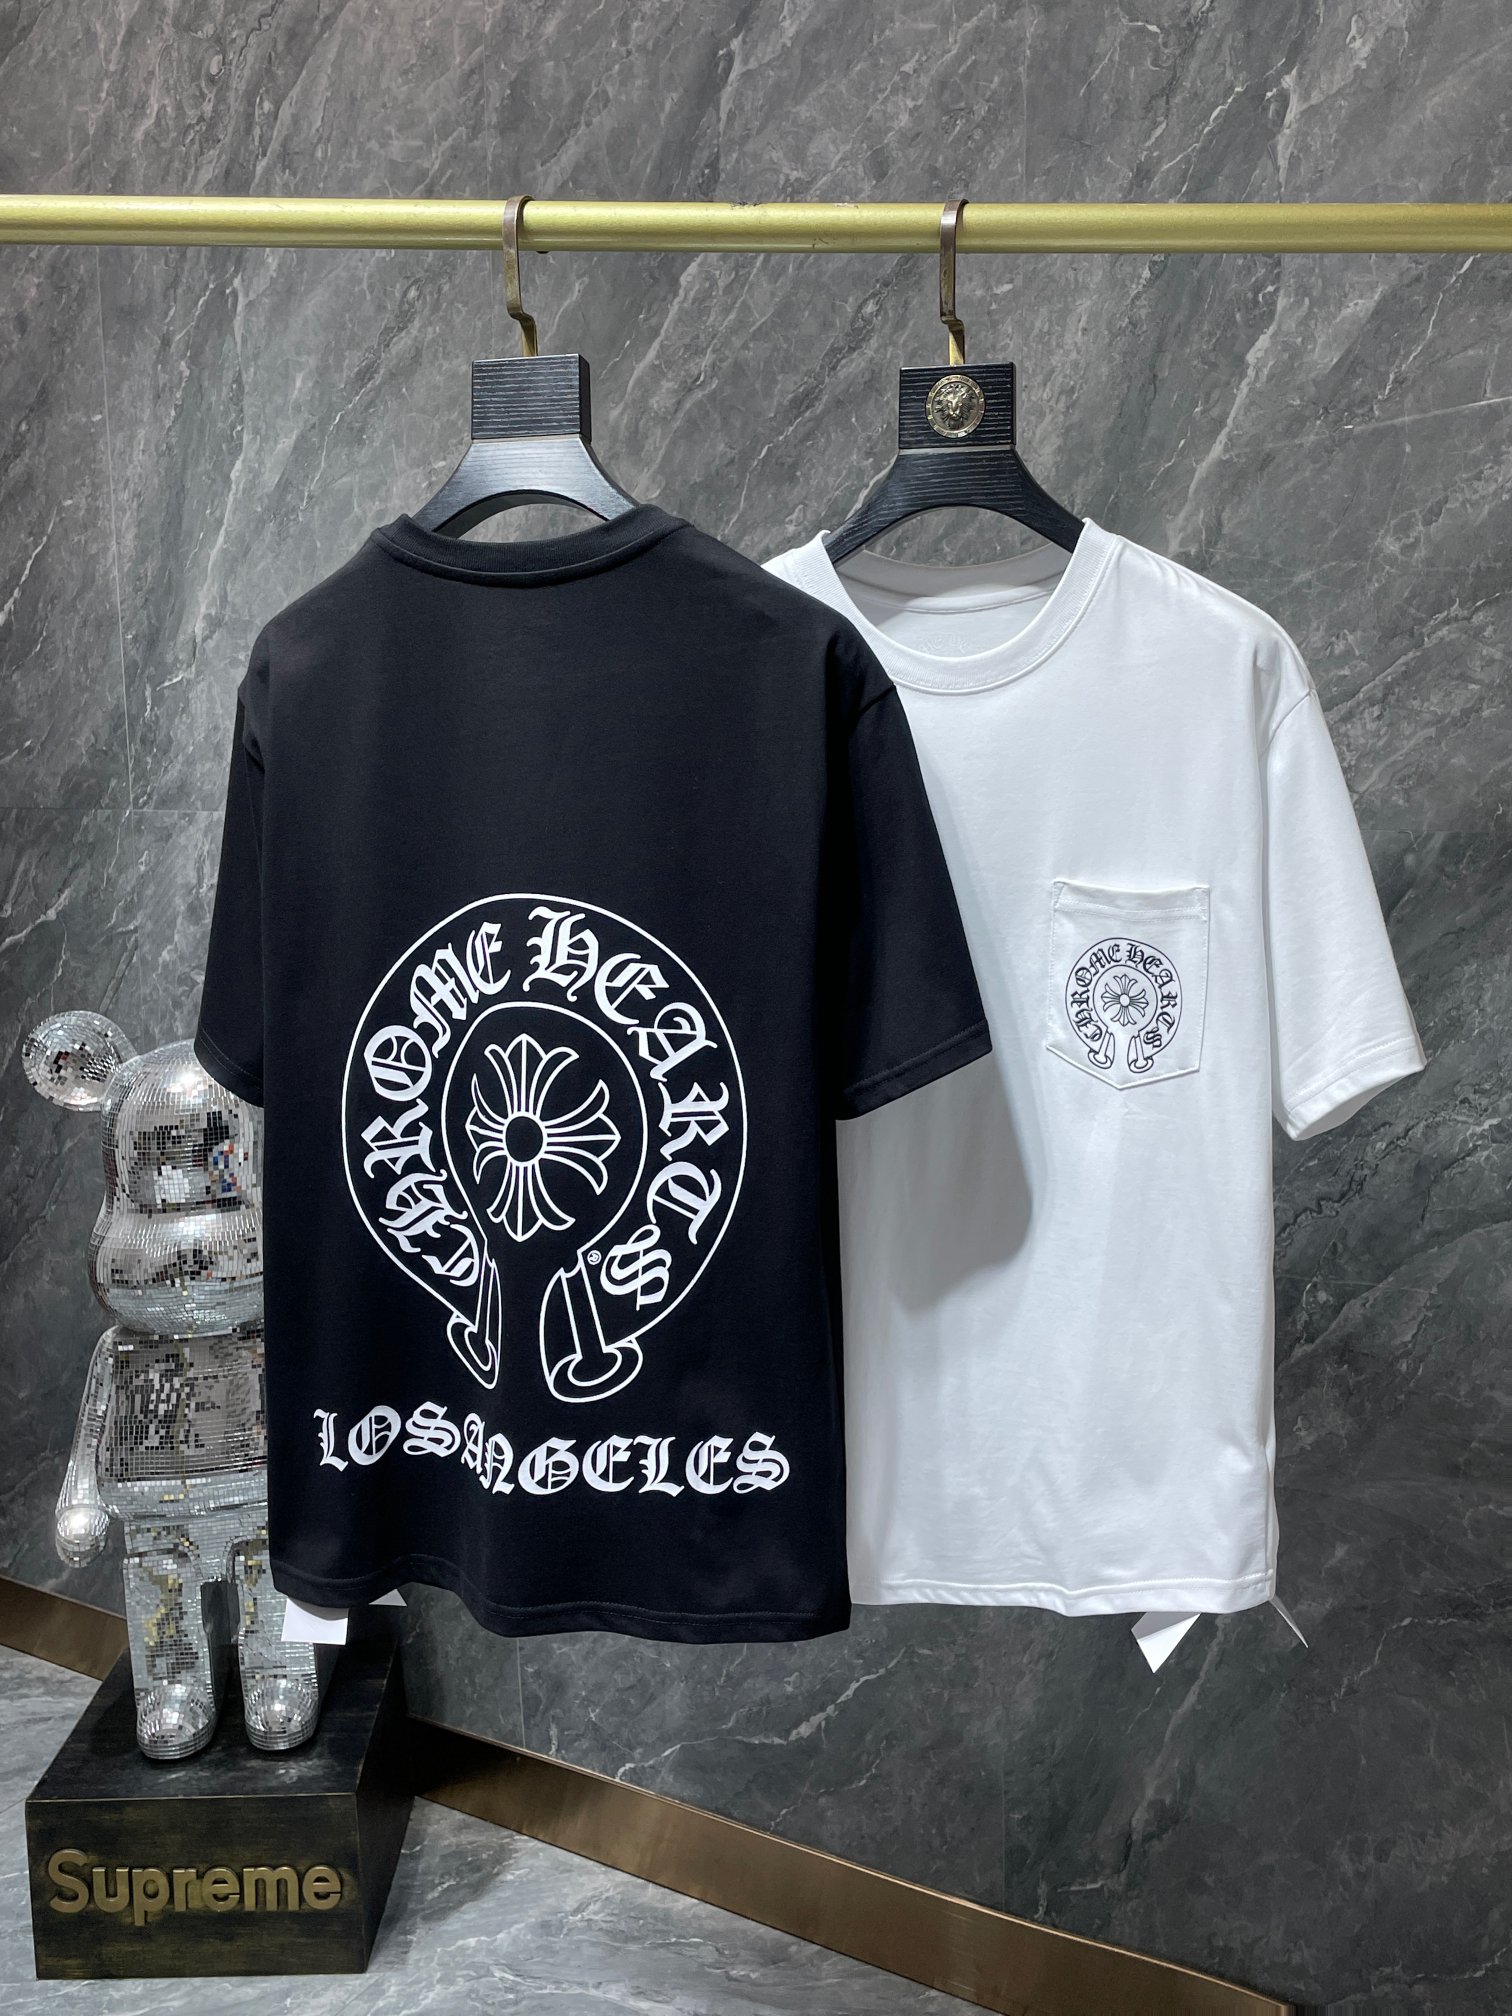 Chrome Hearts Clothing T-Shirt Black White Short Sleeve